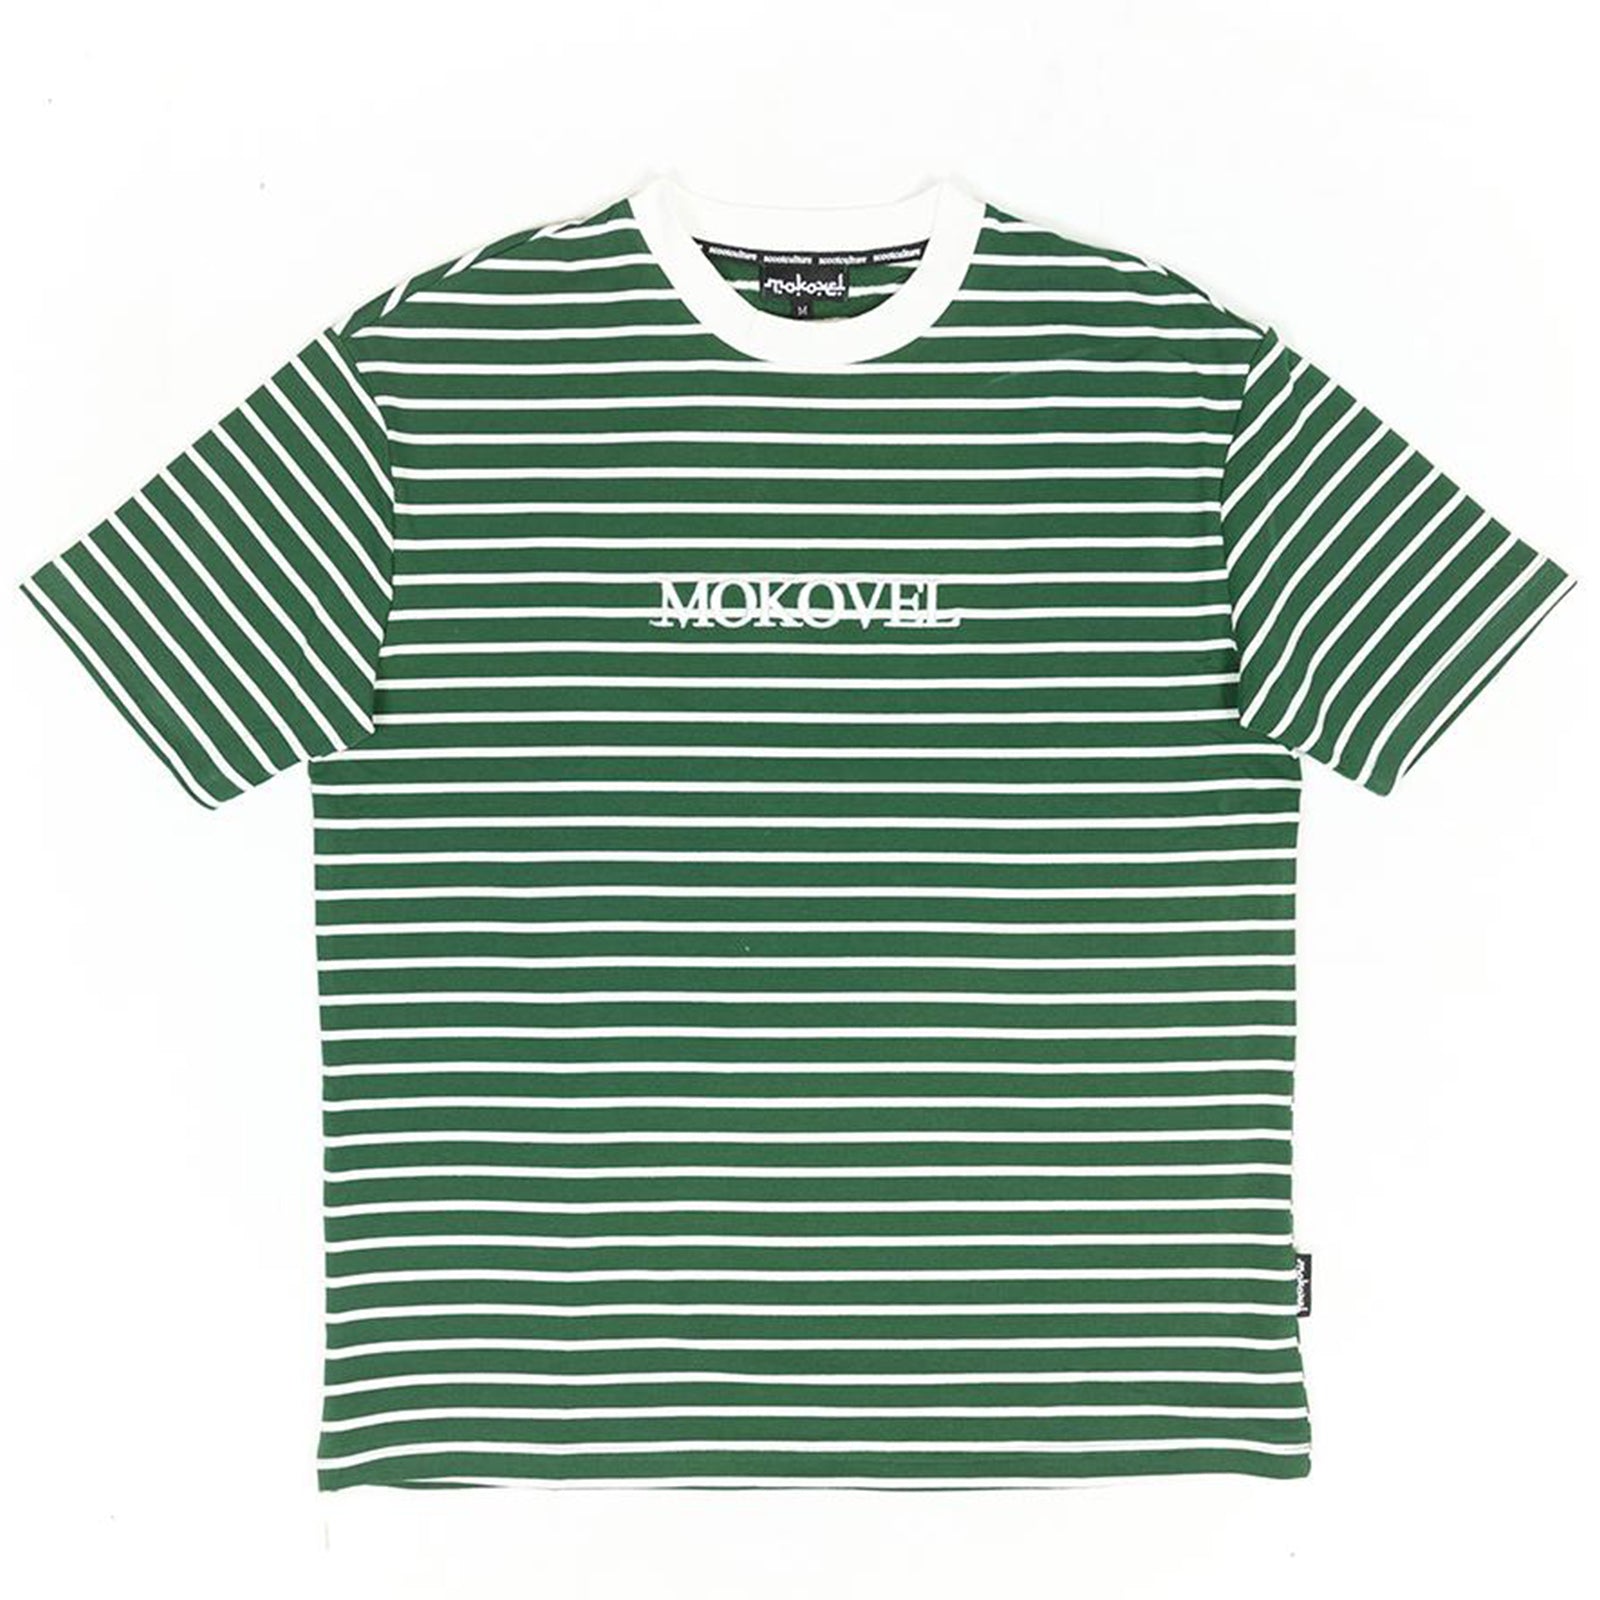 Mokovel Striped Green T-shirt